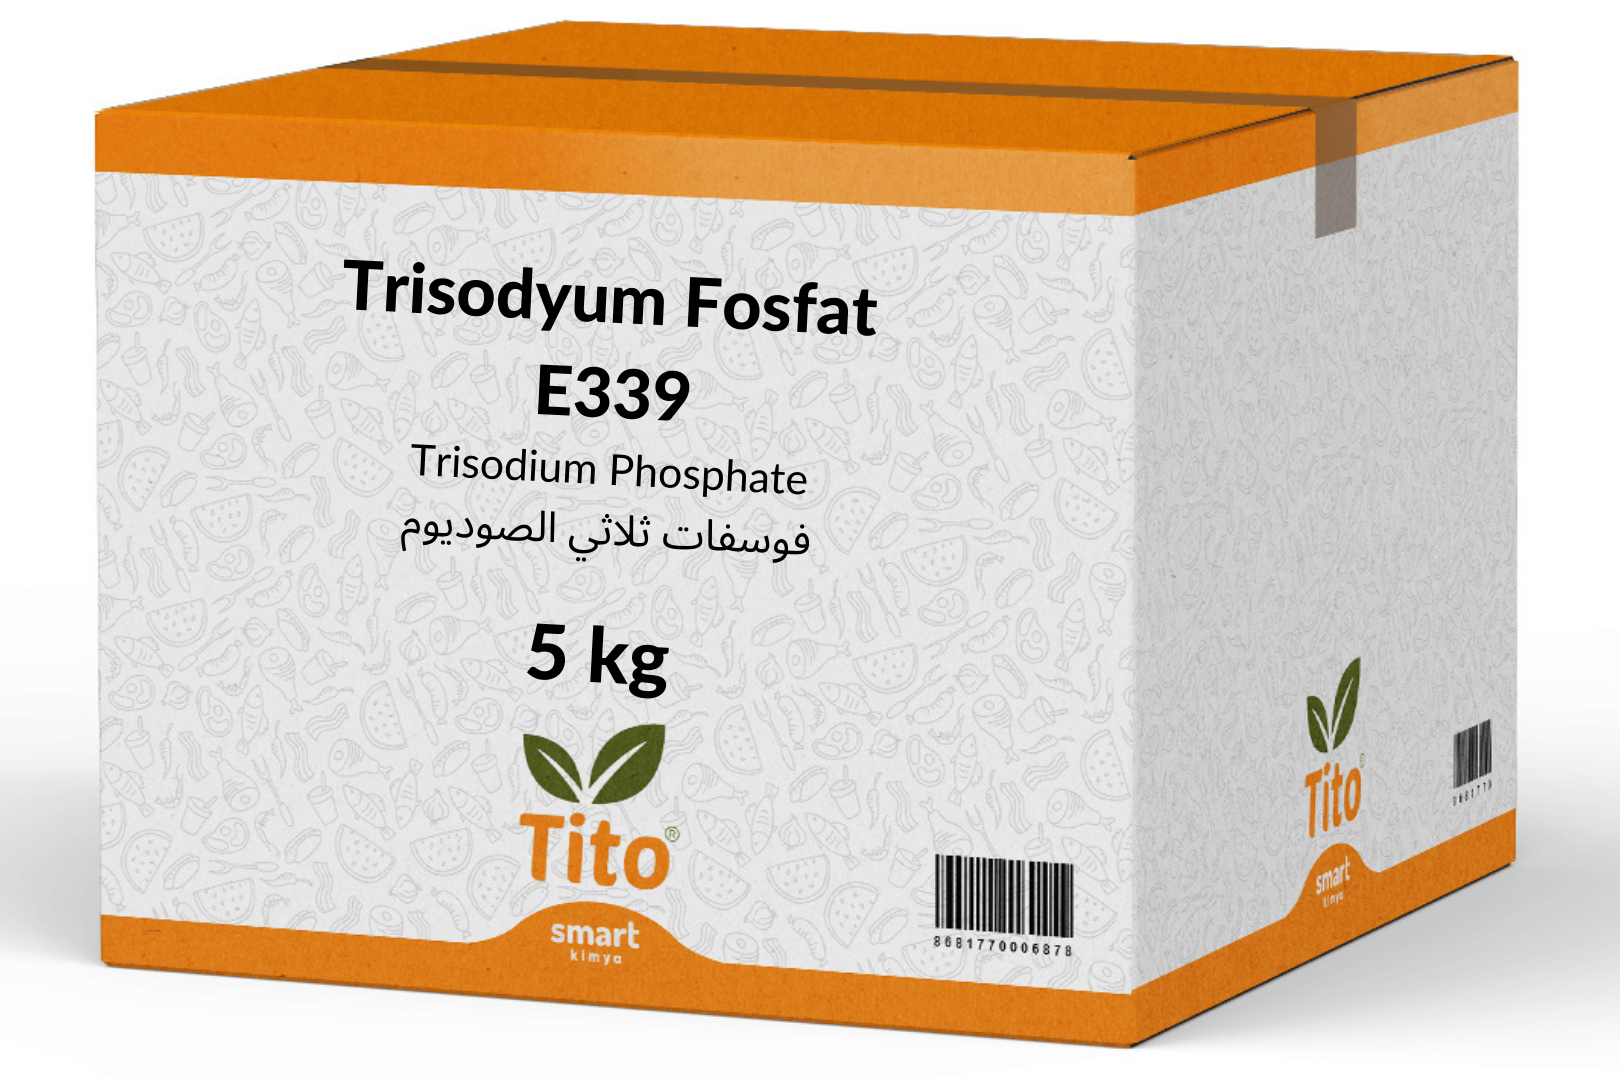 Trisodyum Fosfat E339 5 kg